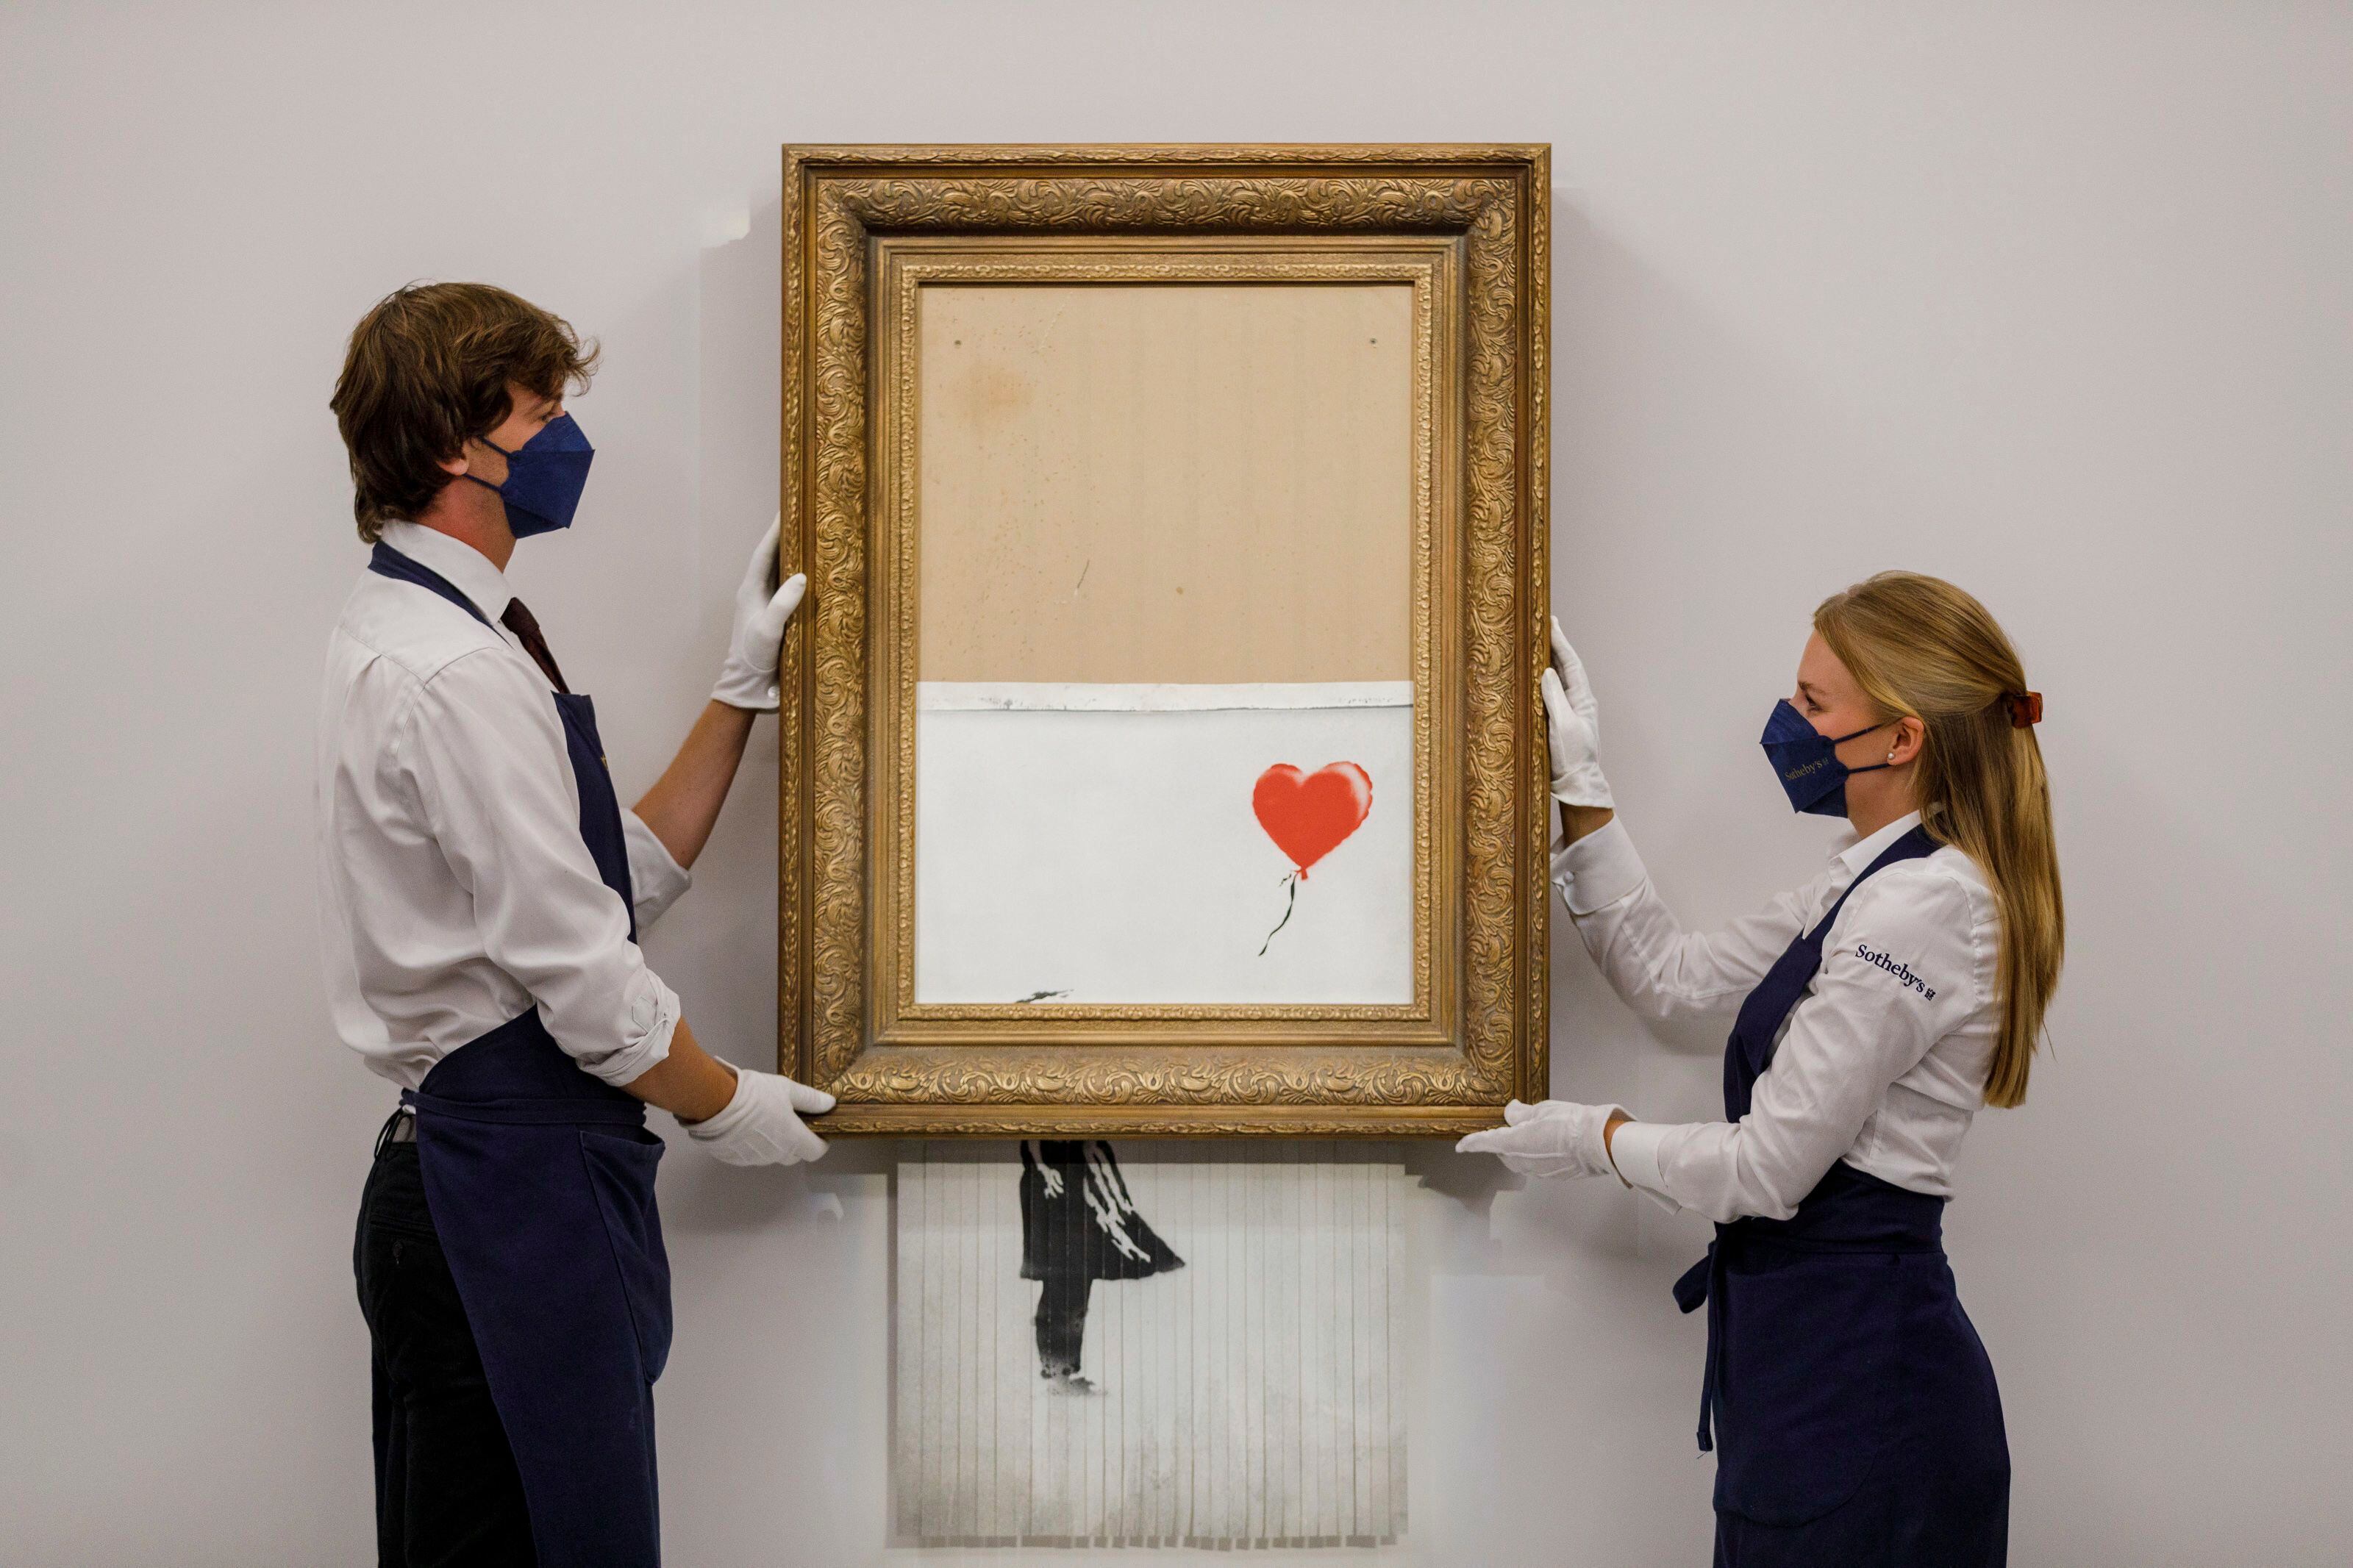 Shredded Banksy artwork sells for $25.4 million at auction